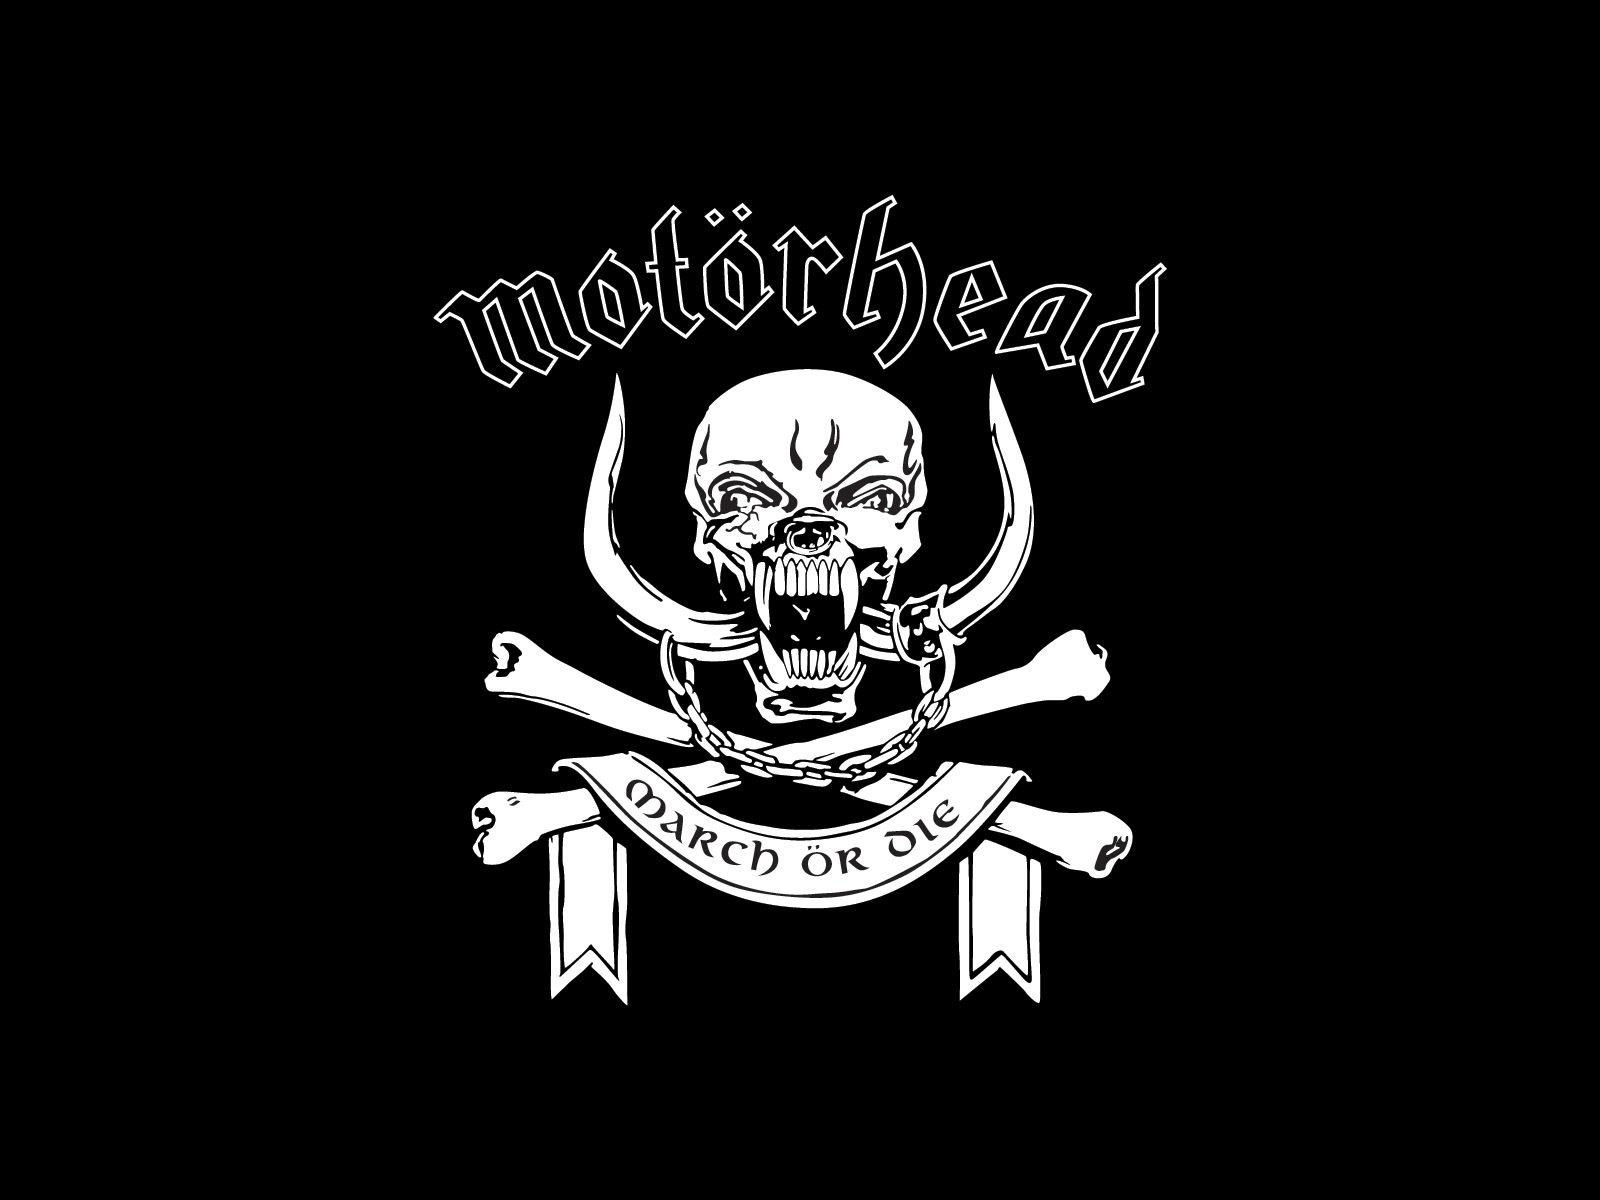 motorhead wallpaper. Band logos band logos, metal bands